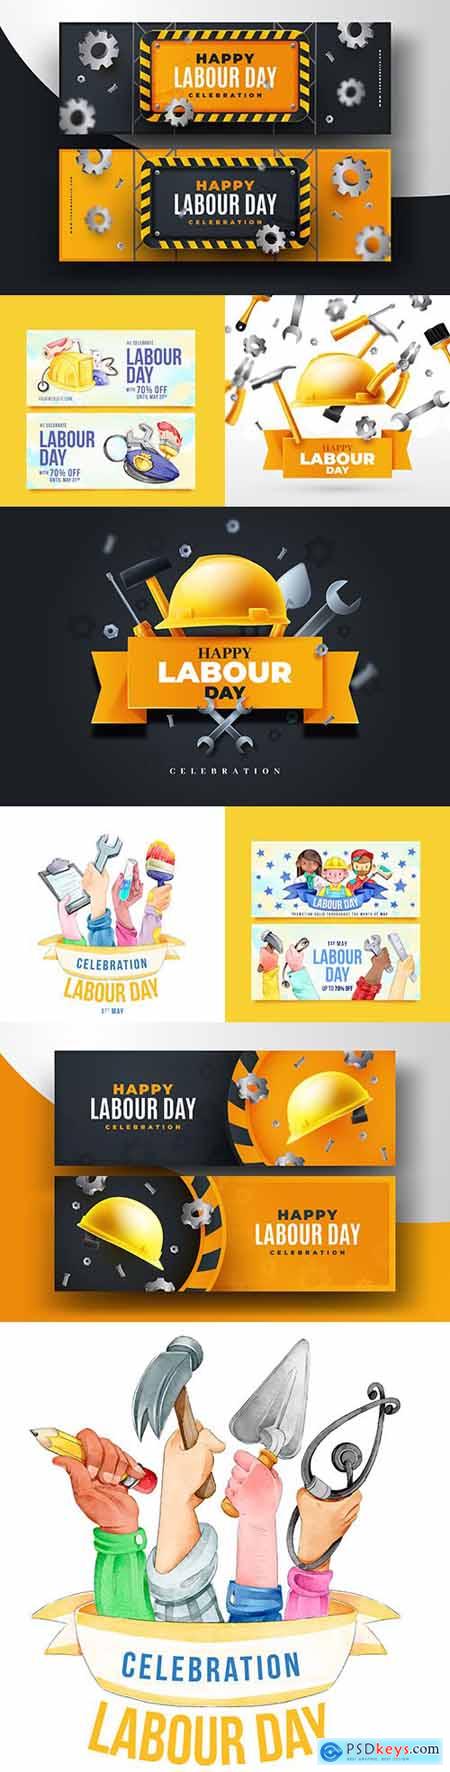 Happy Labor Day design banter realistic illustrations 3